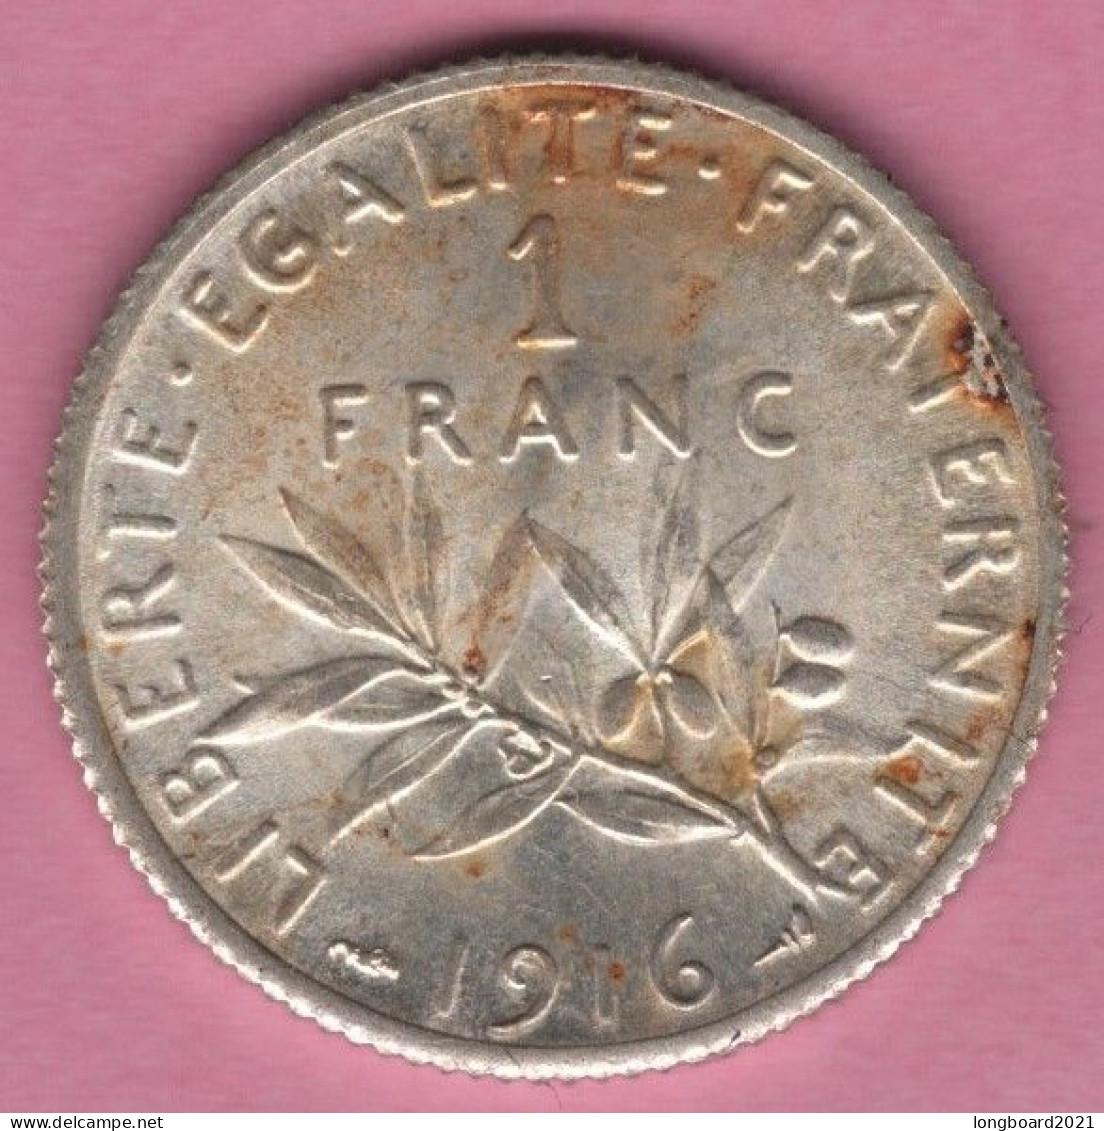 FRANCE - 1 FRANC 1916 - 1 Franc